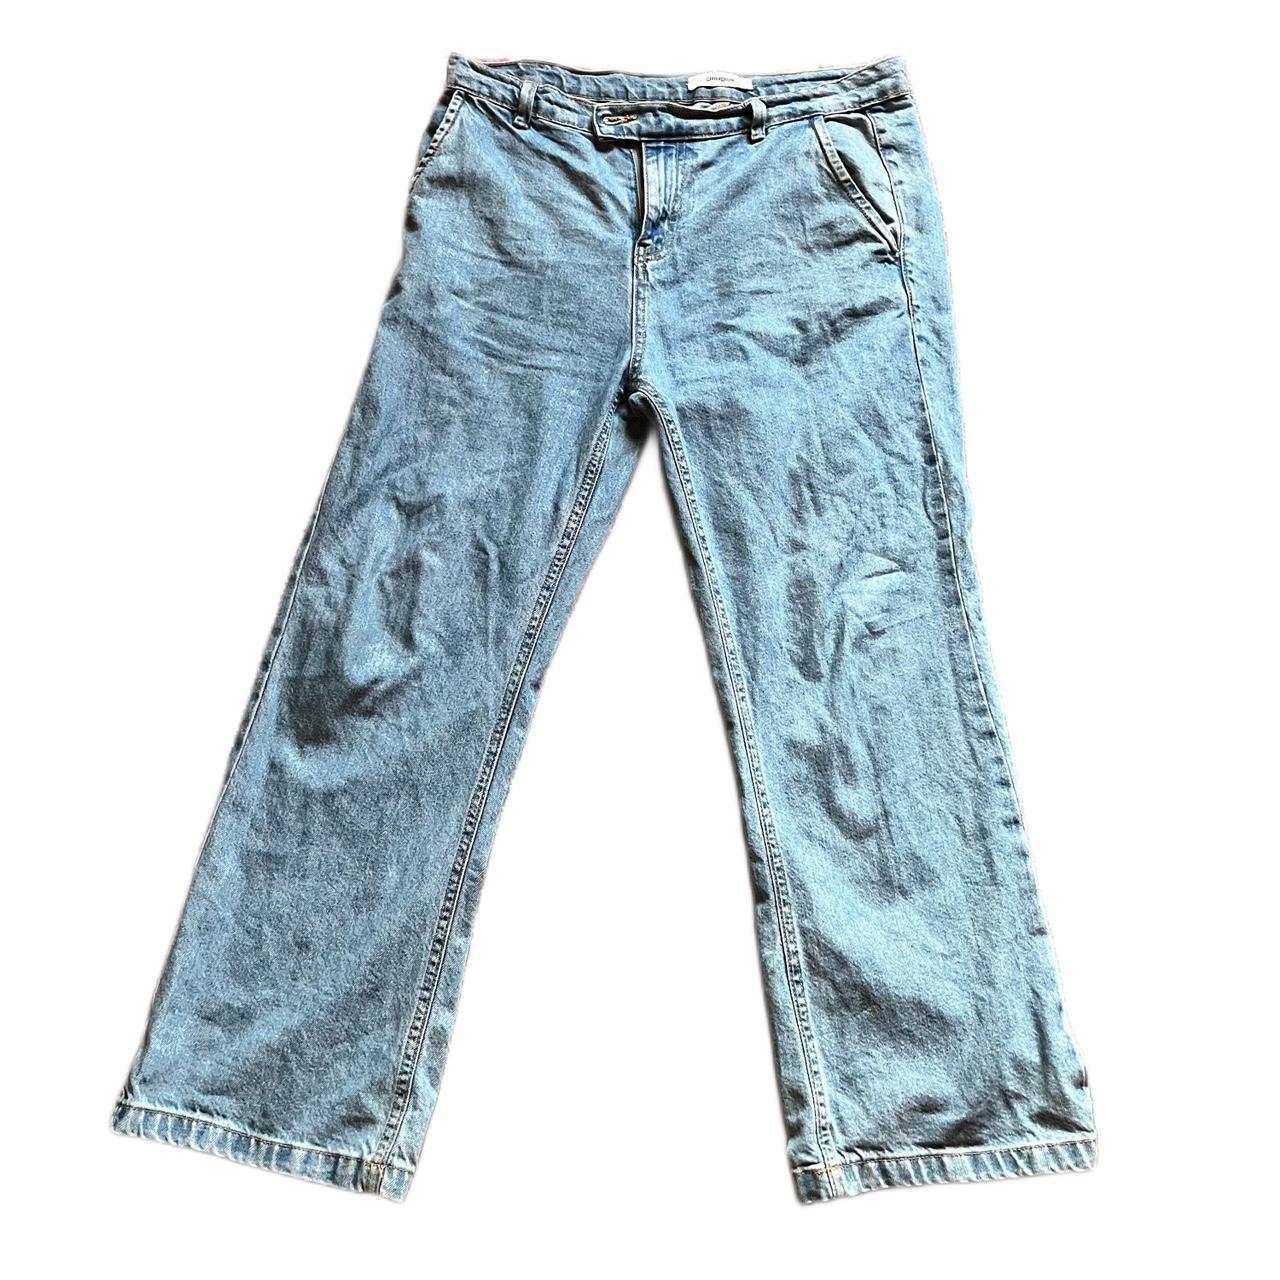 Gimaguas Blue Carlito Jeans A beautiful pair of... - Depop